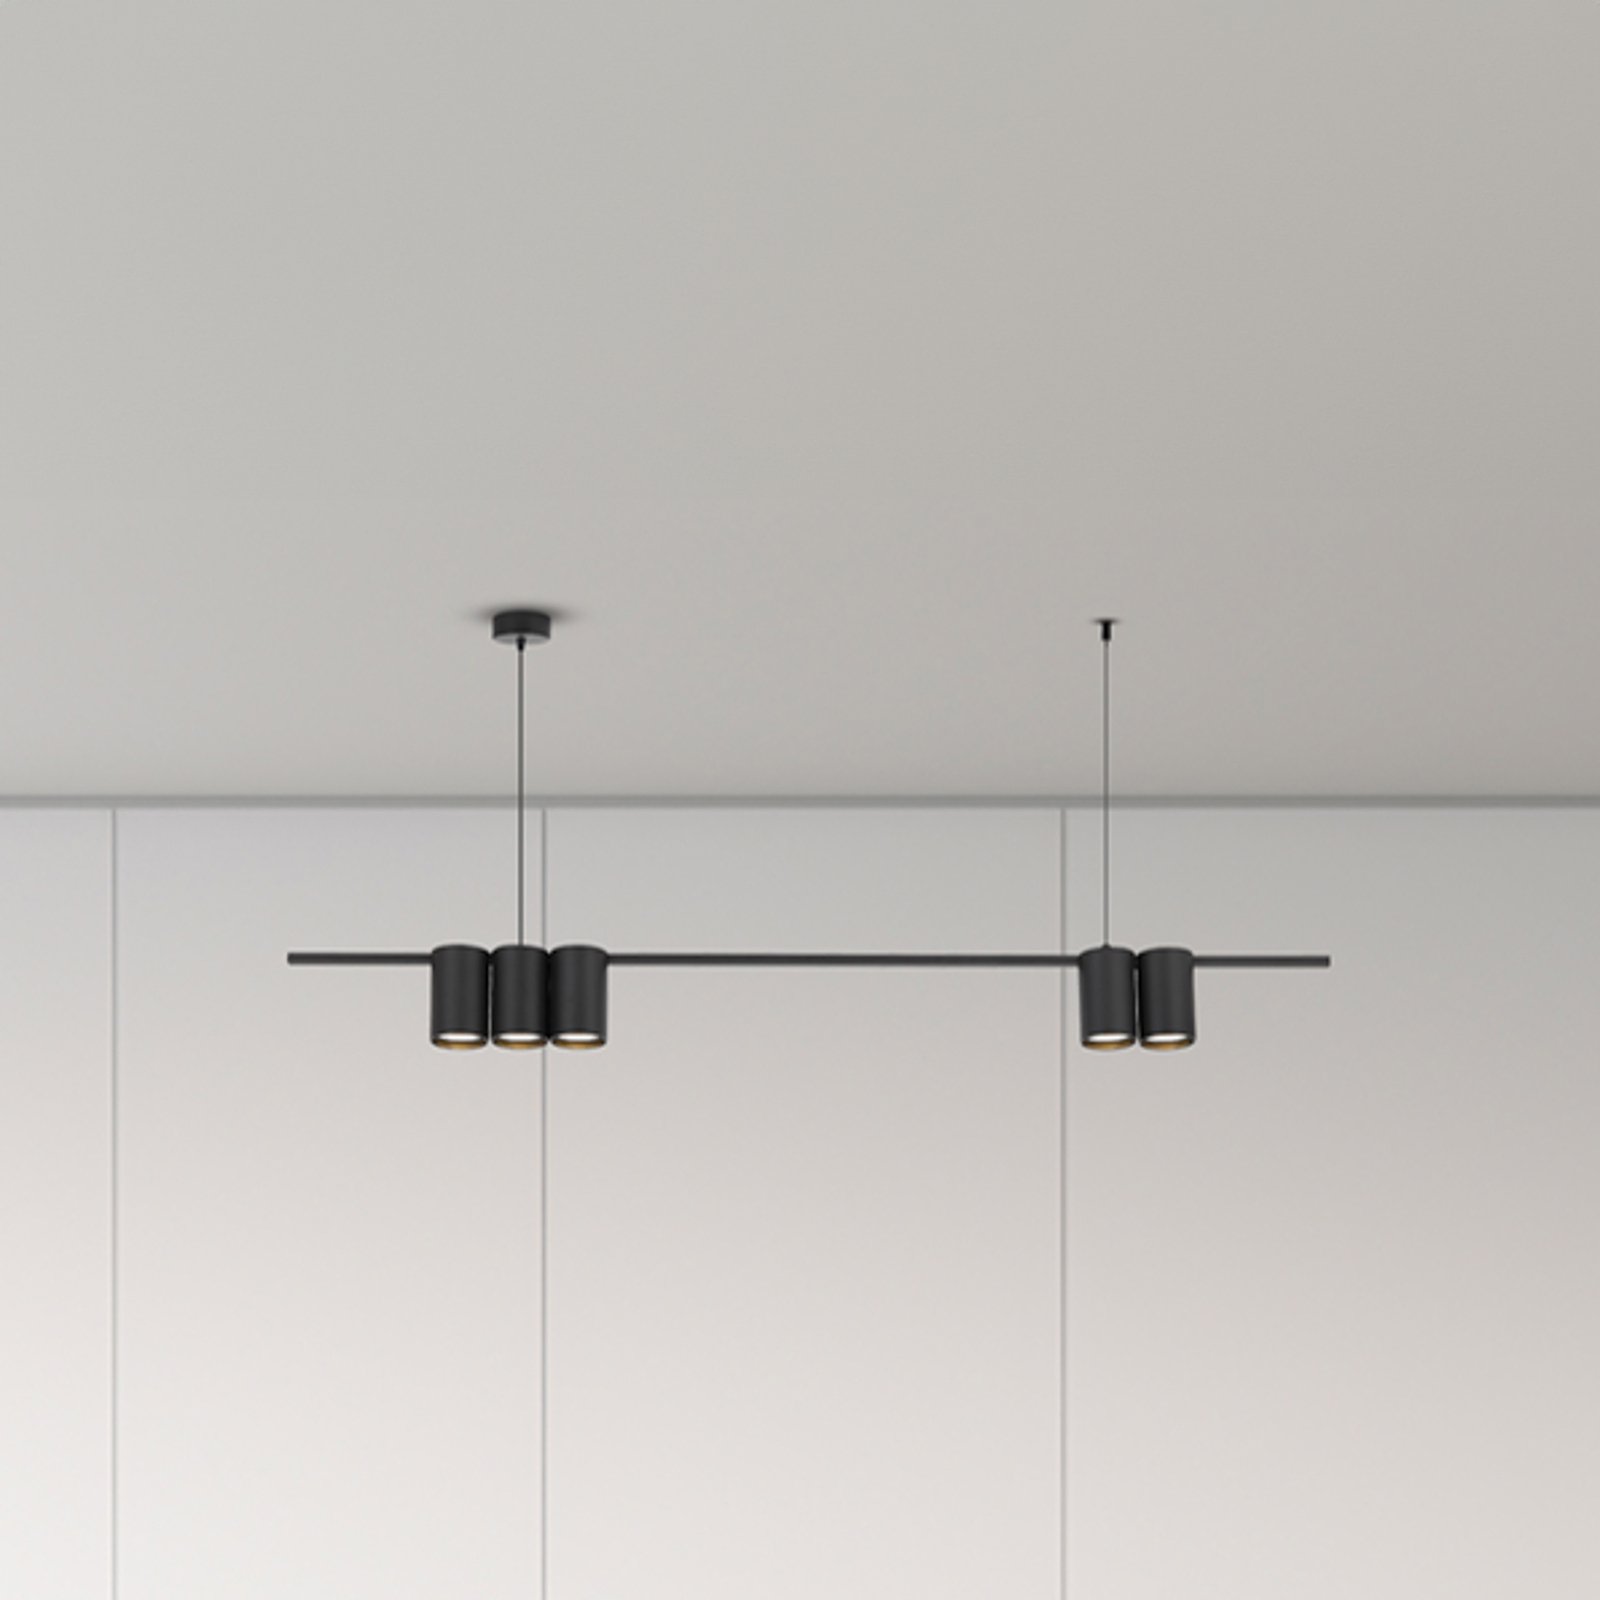 Hanglamp Genesis, aluminium, zwart, 5 x GU10, lengte 100 cm